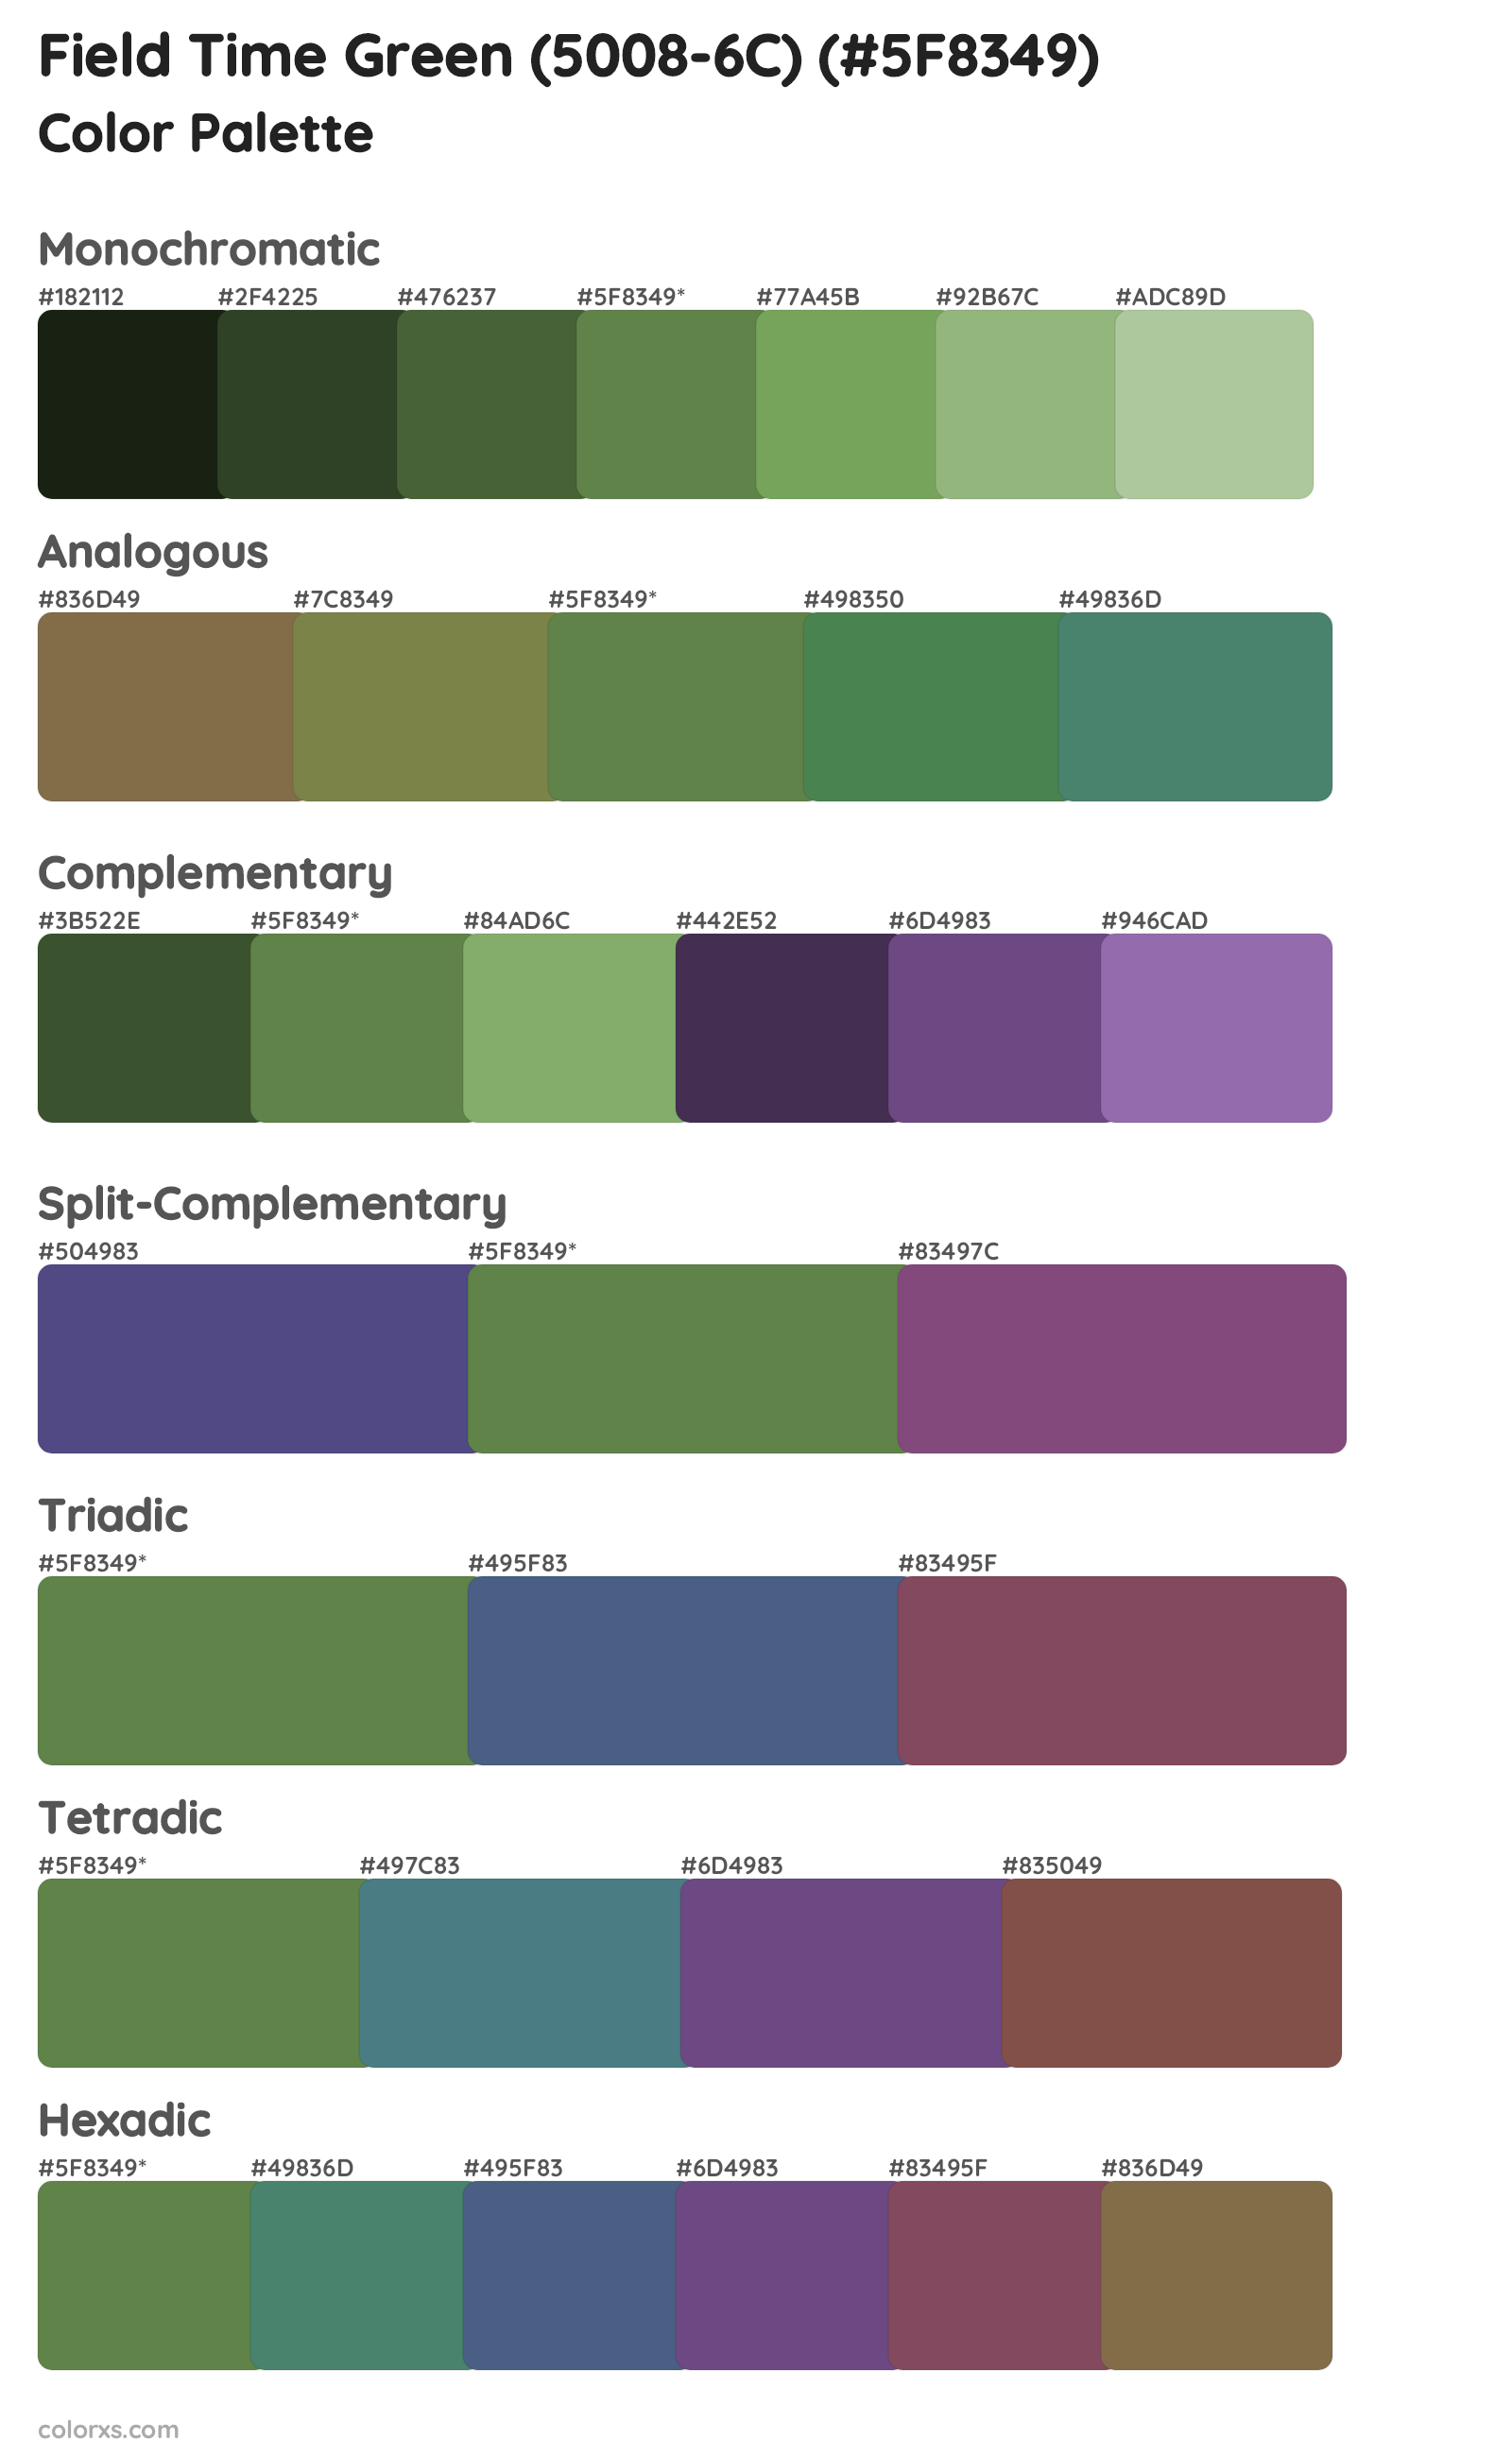 Field Time Green (5008-6C) Color Scheme Palettes